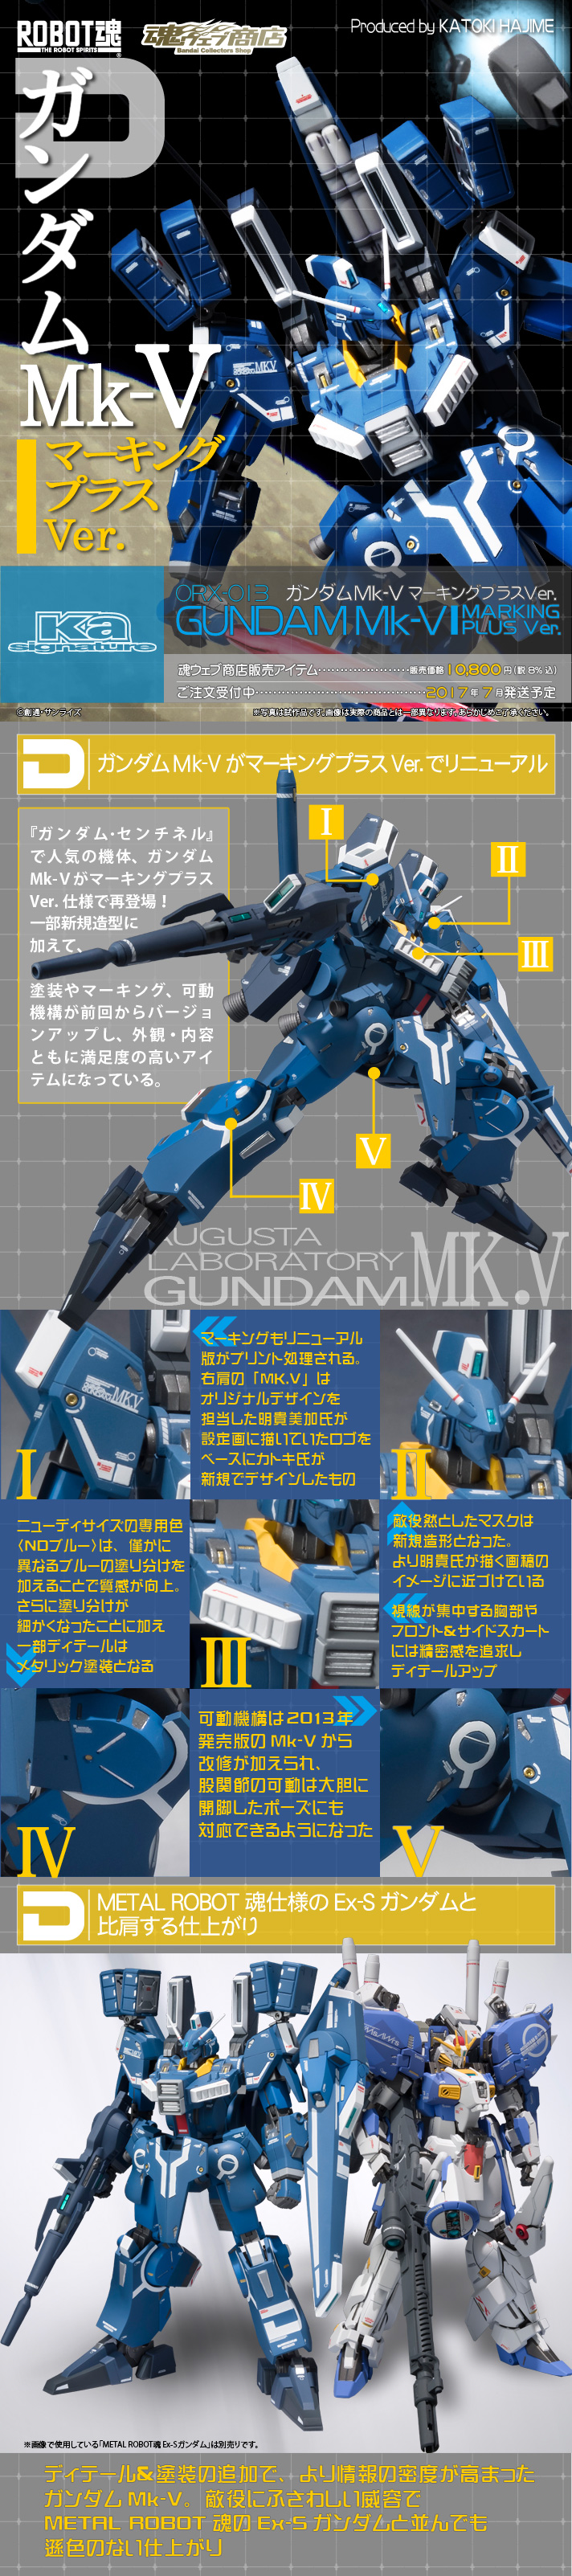 ROBOT魂　GANDAM Mk V marking plusフィギュア